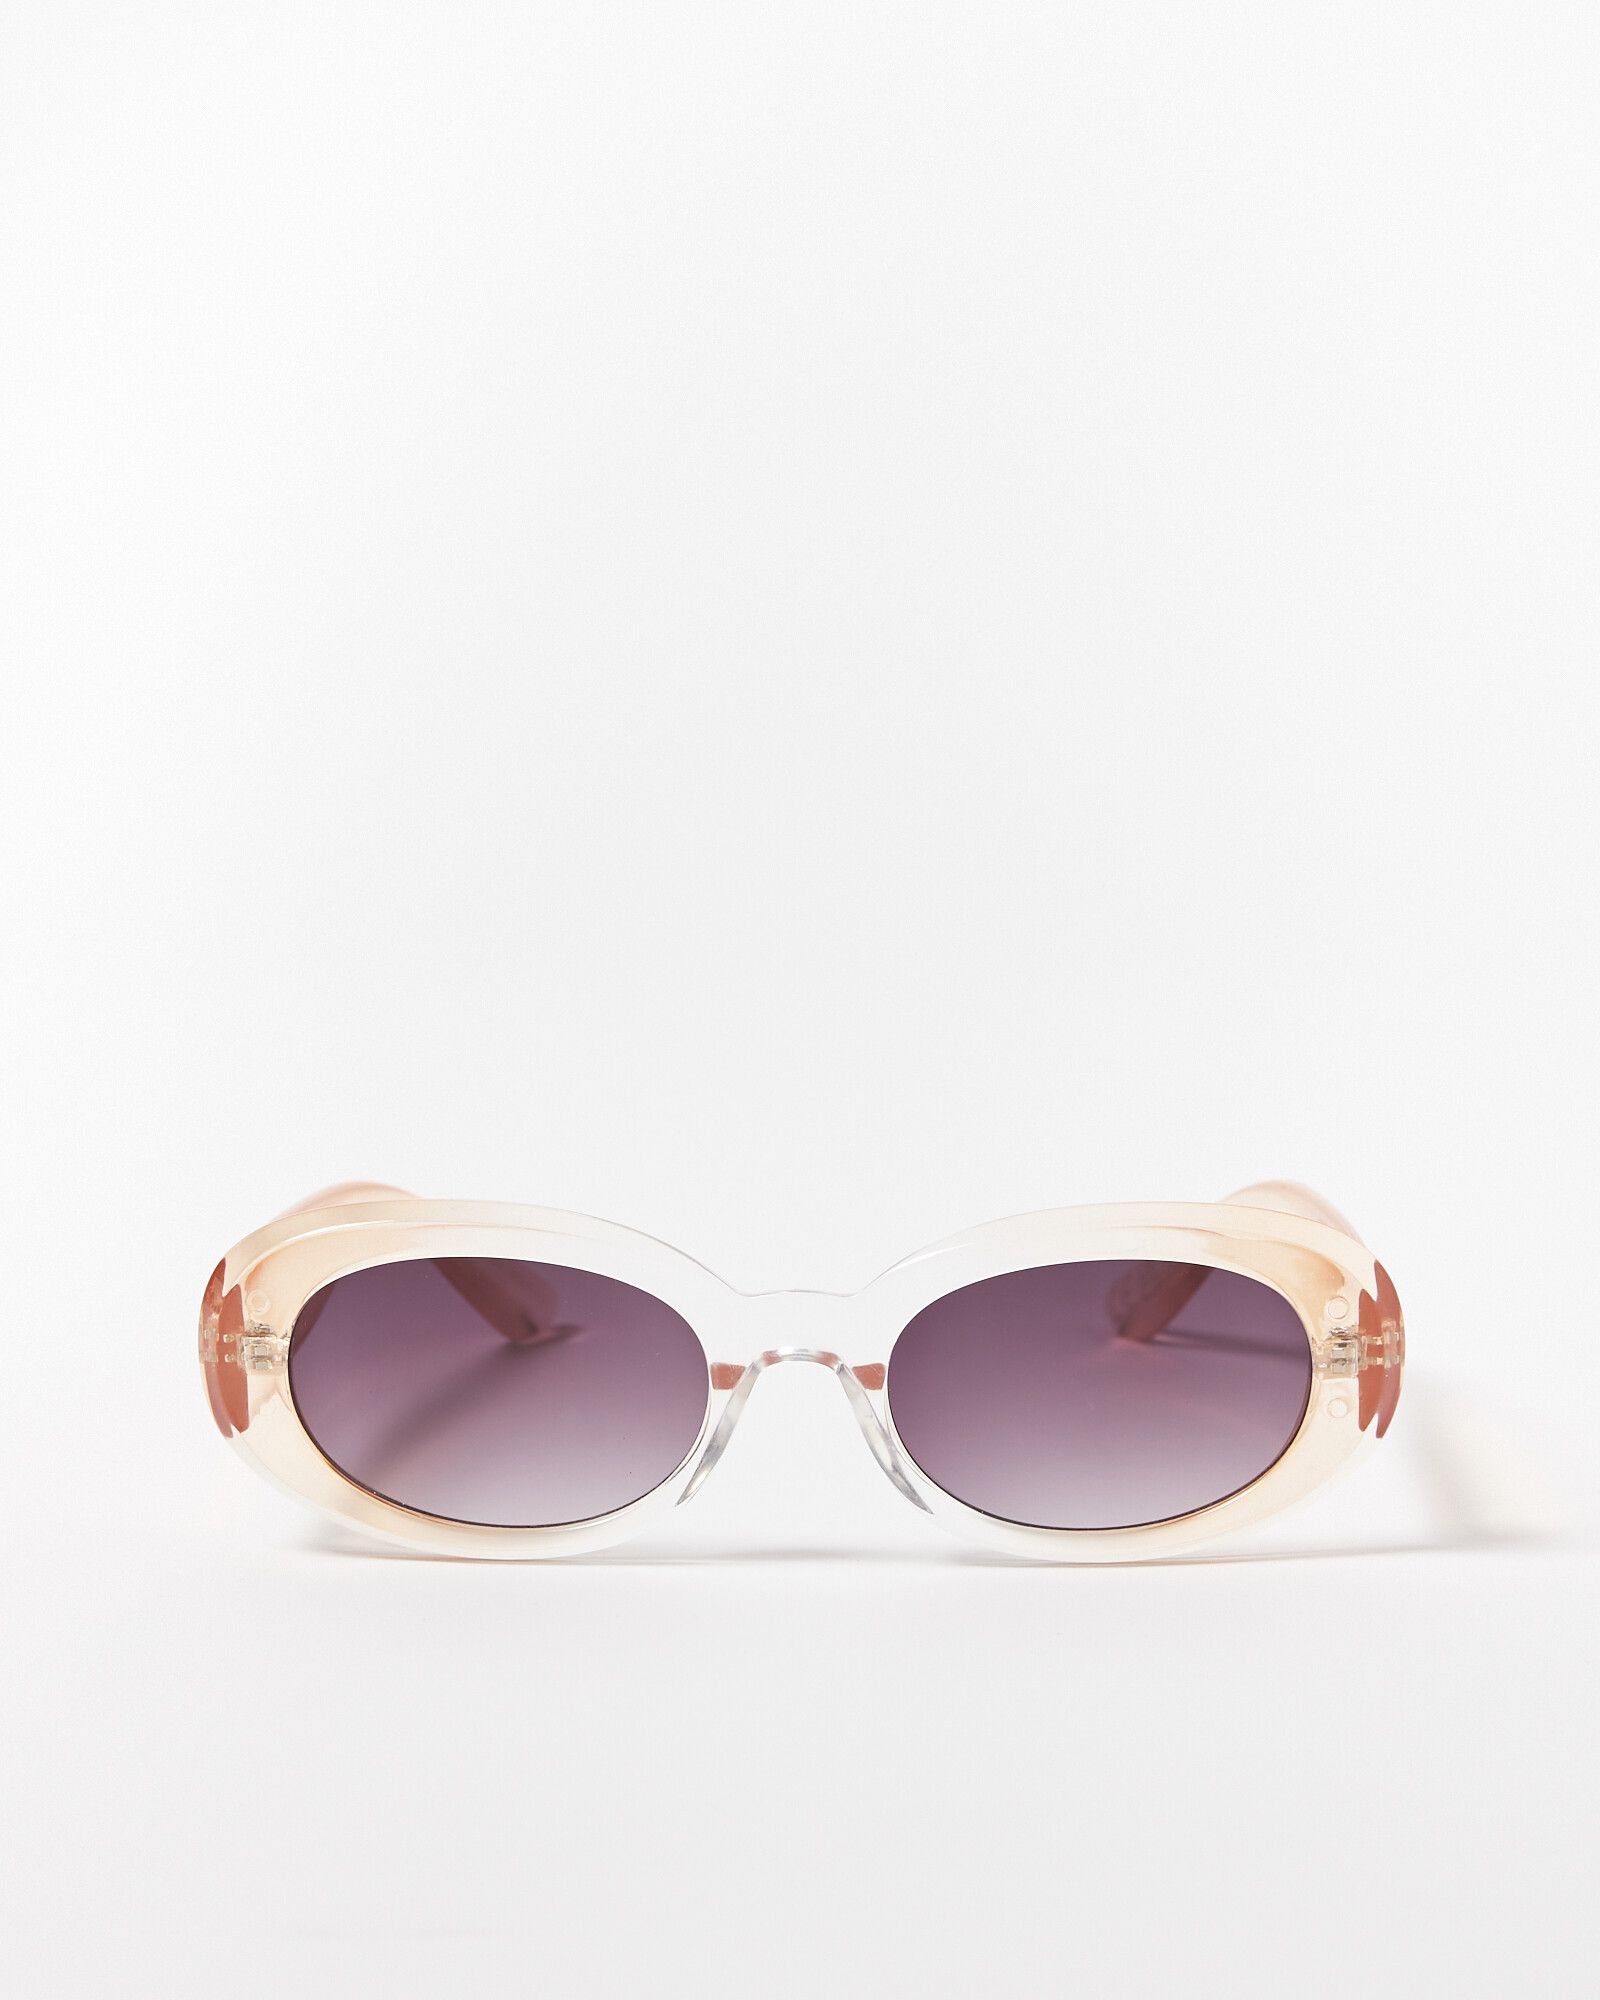 Sunisery Unisex Outdoor UV400 Glasses Baby Round Sunglasses for Party Beach  - Walmart.com